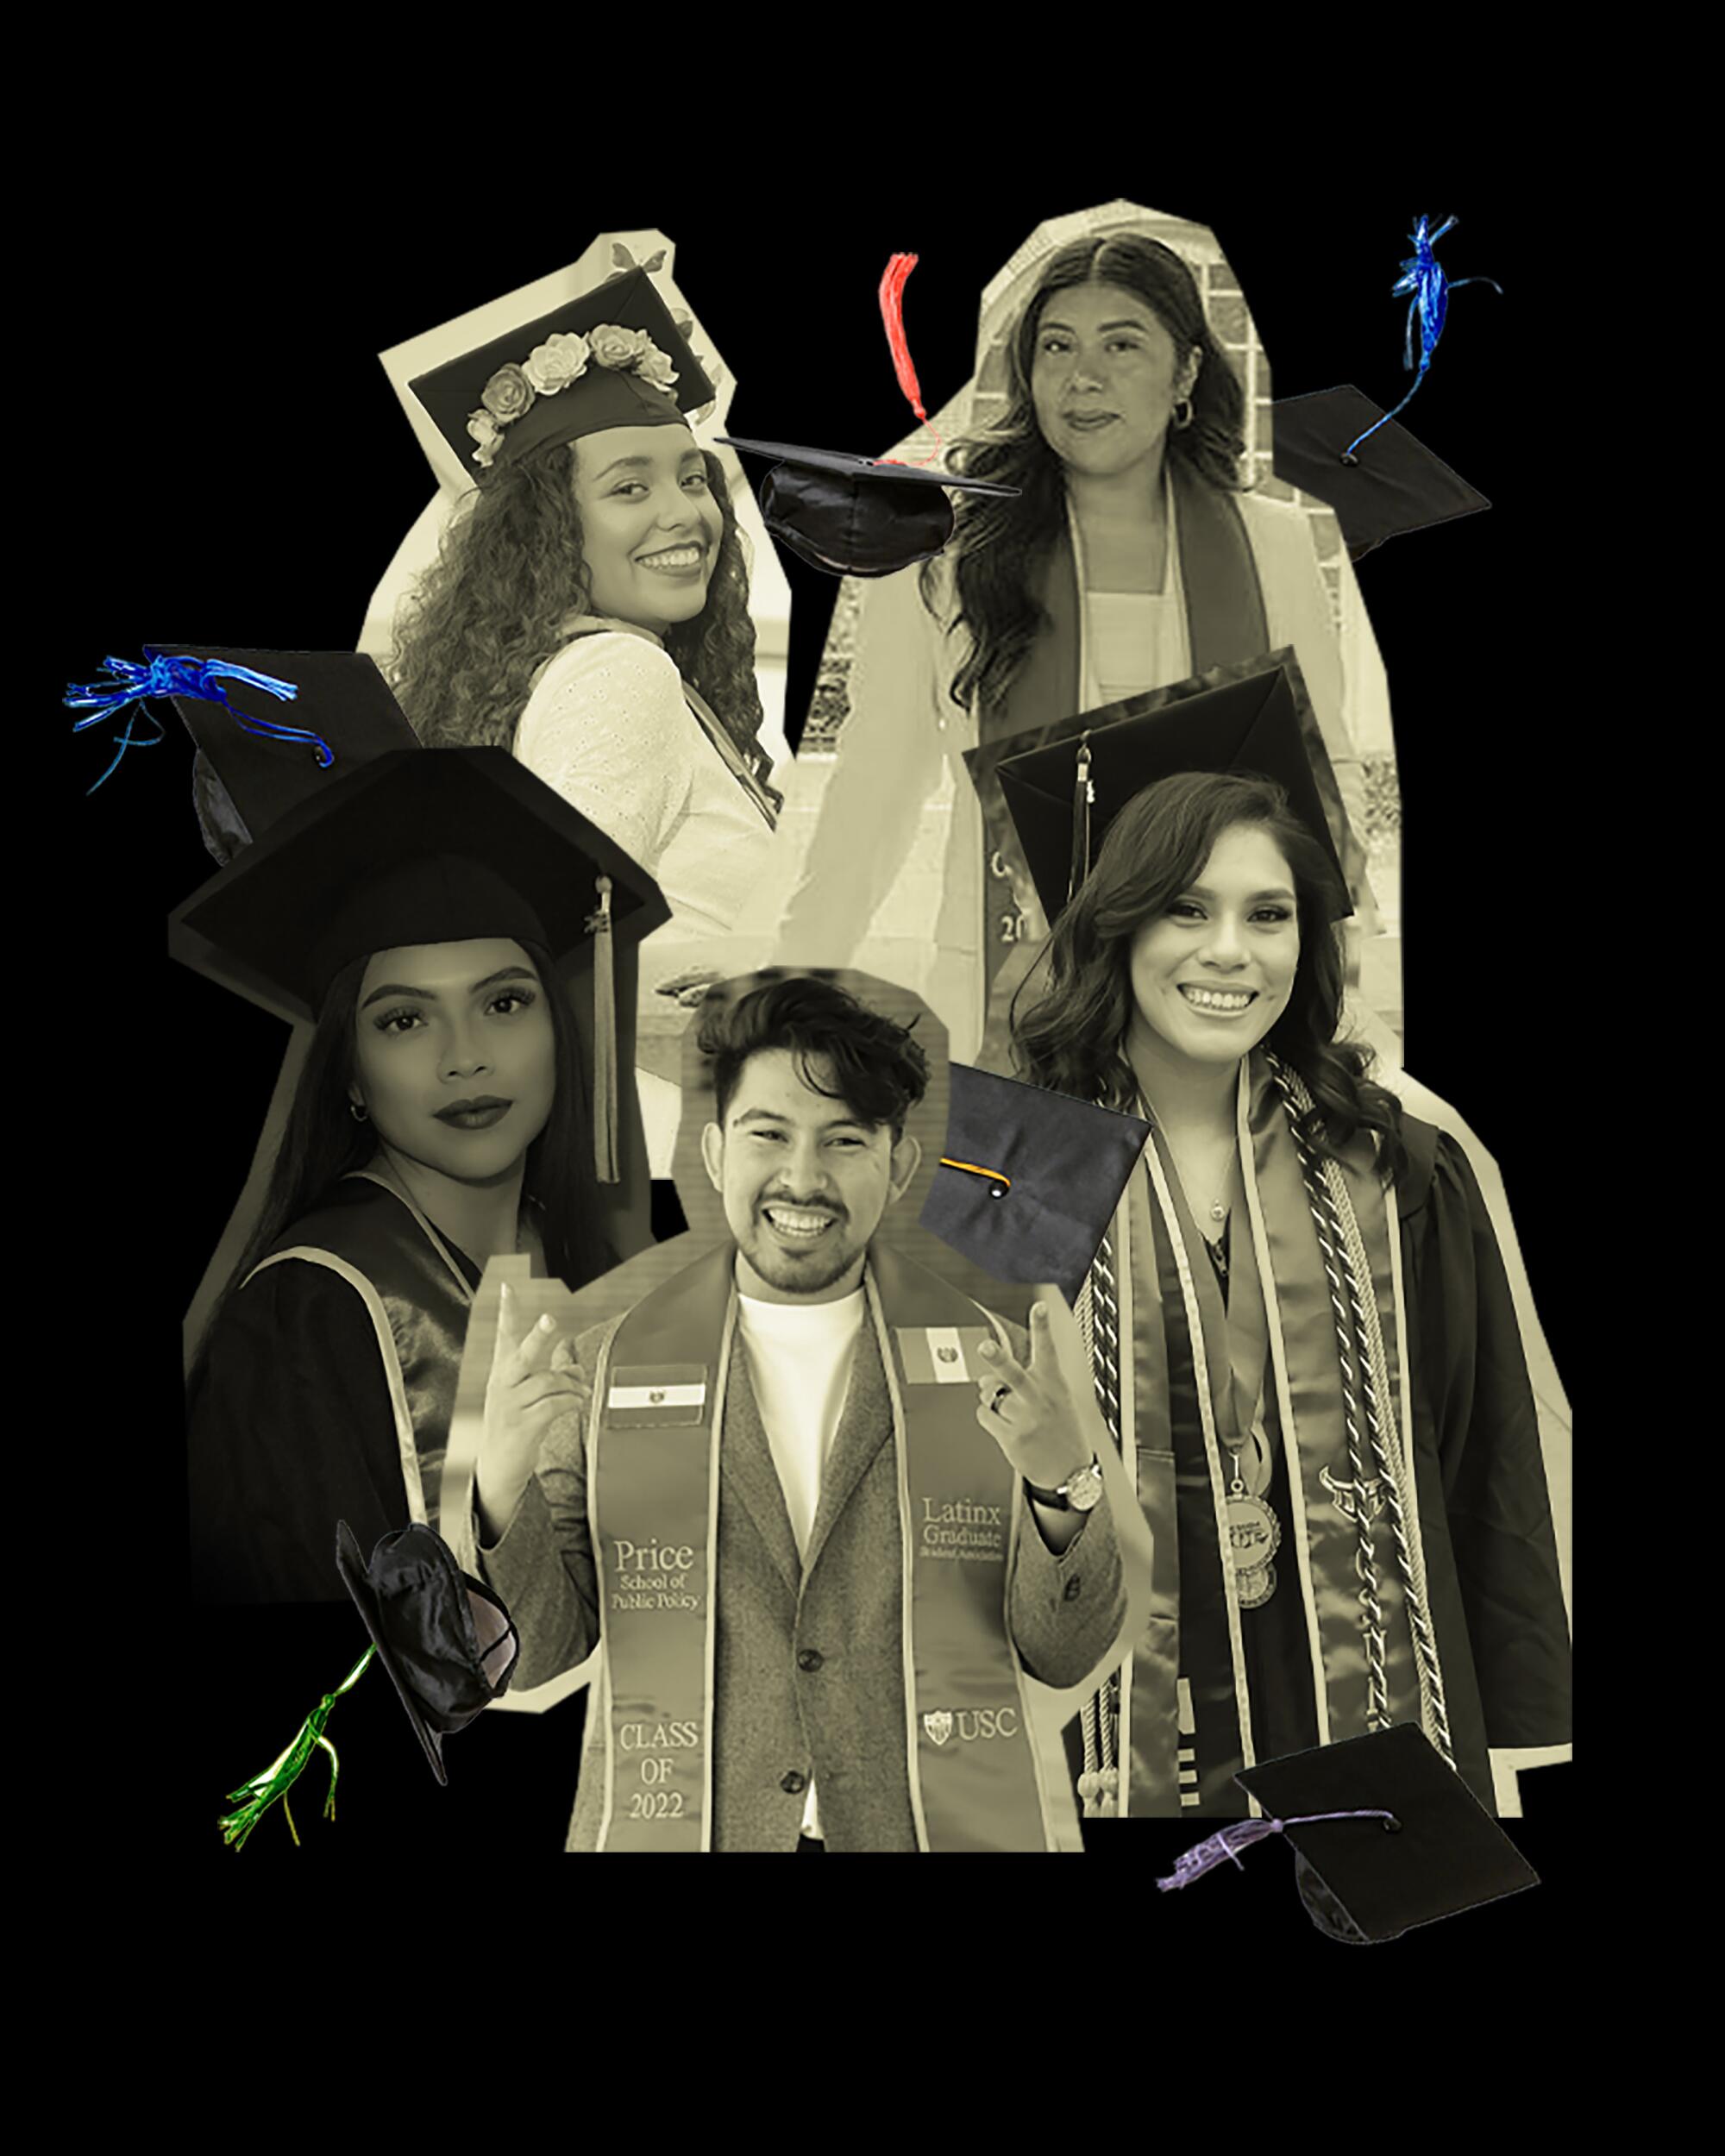 Images of graduating students and graduation caps 